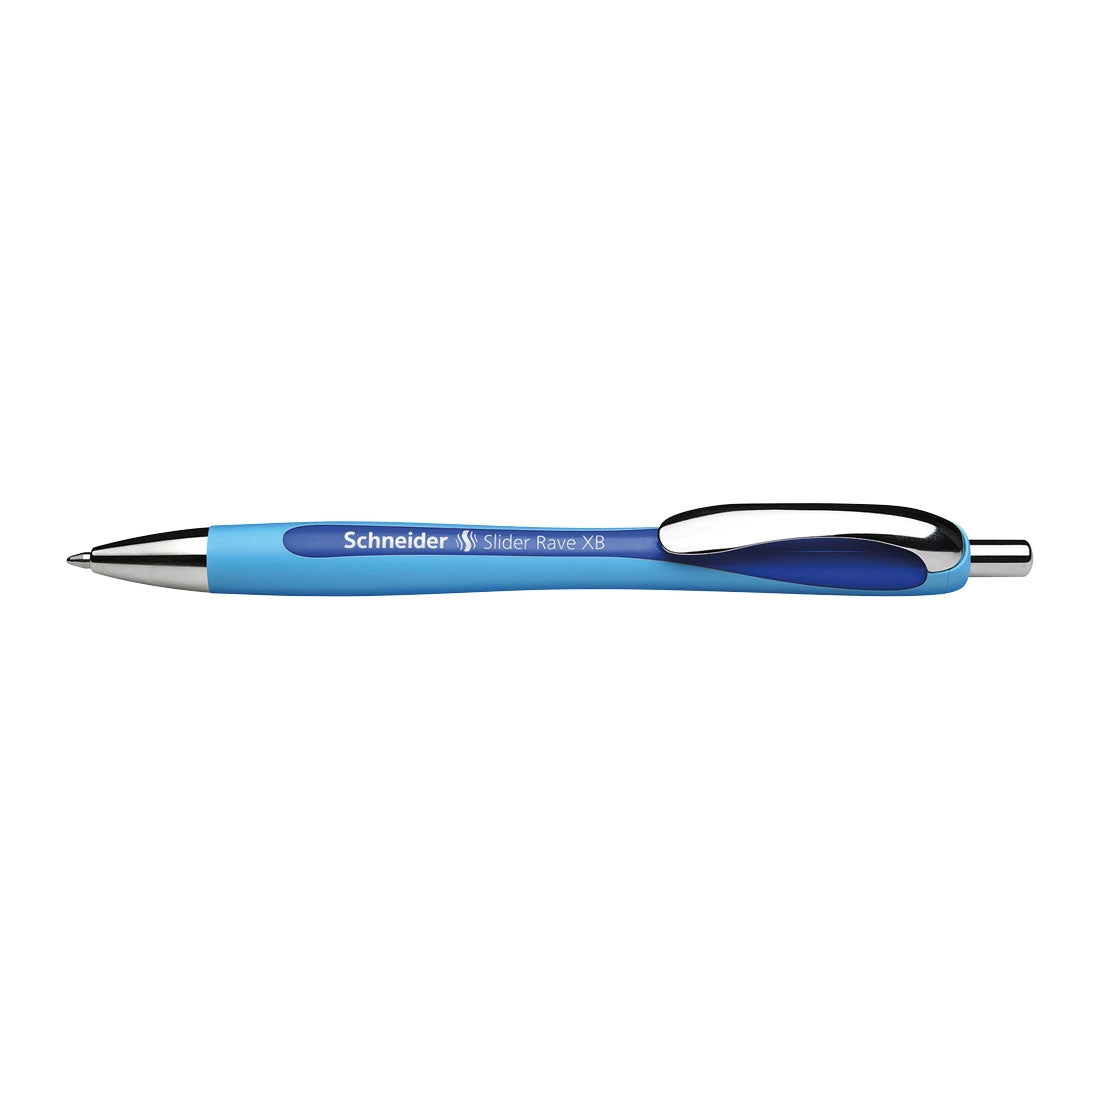 Rave Ballpoint Pen XB, Box of 5 units#ink-colour_blue